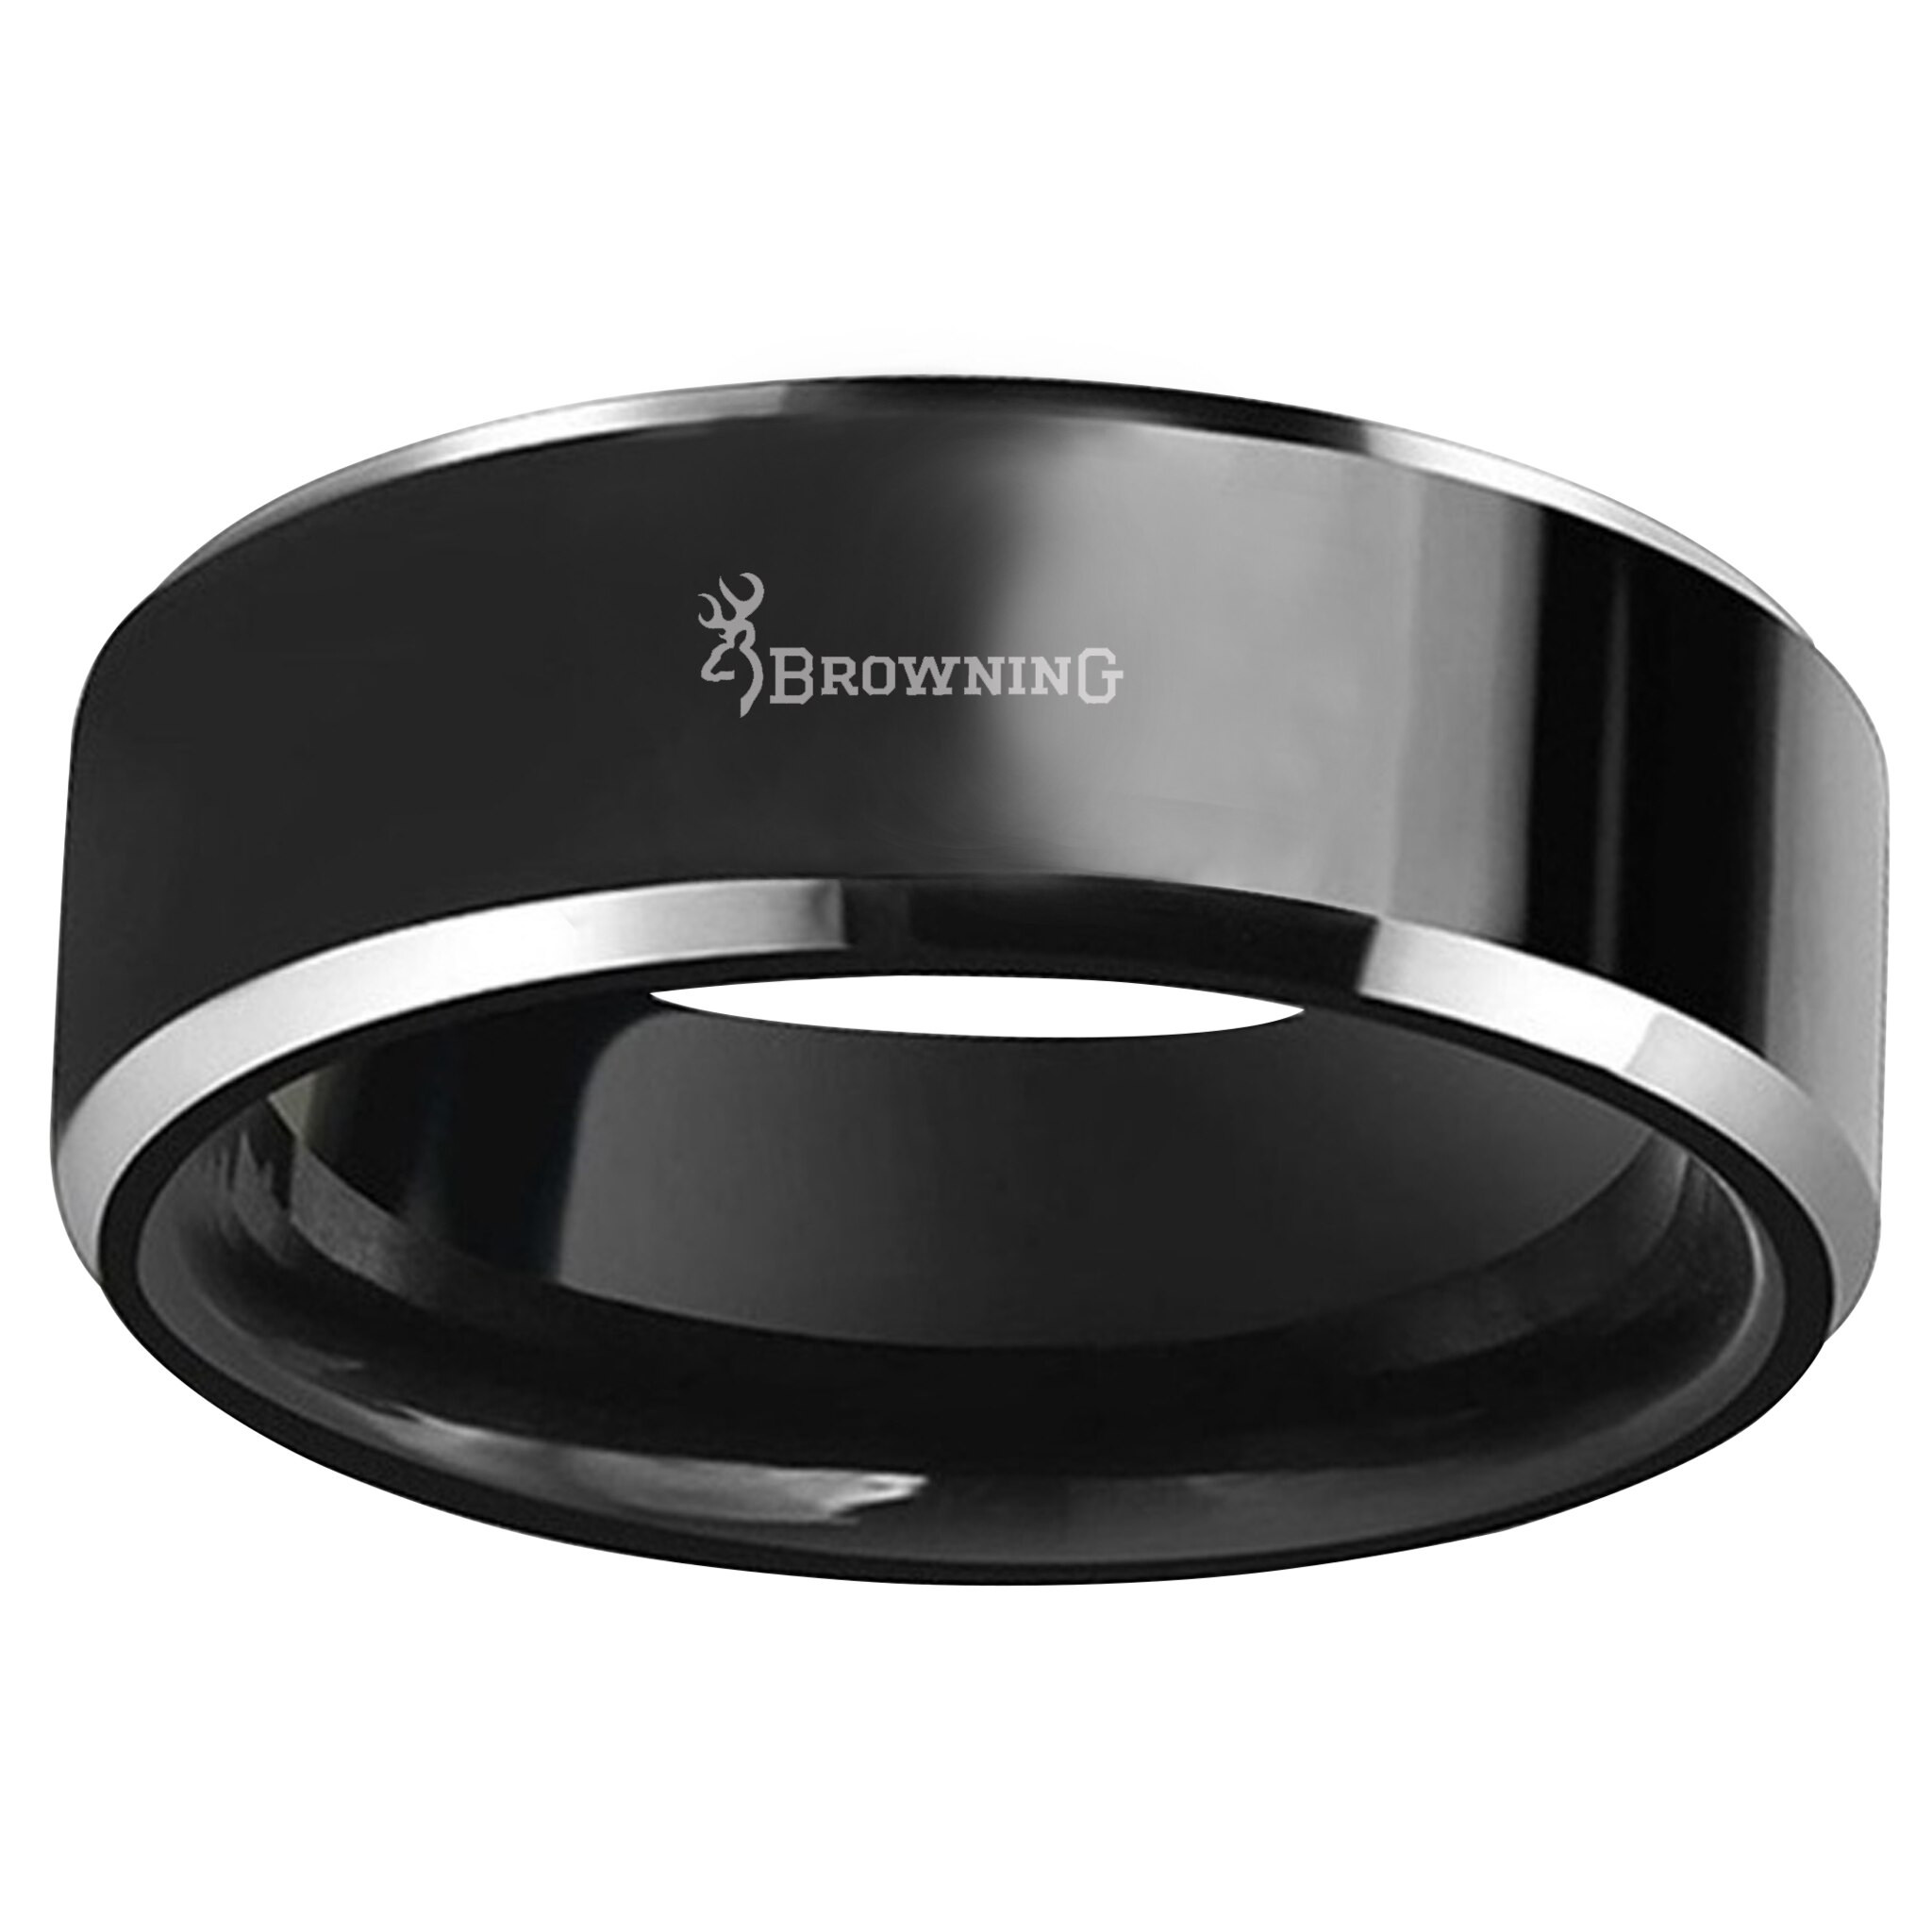 Browning Wedding Rings
 Tungsten Wedding Ring Personalize Engrave Wedding Band